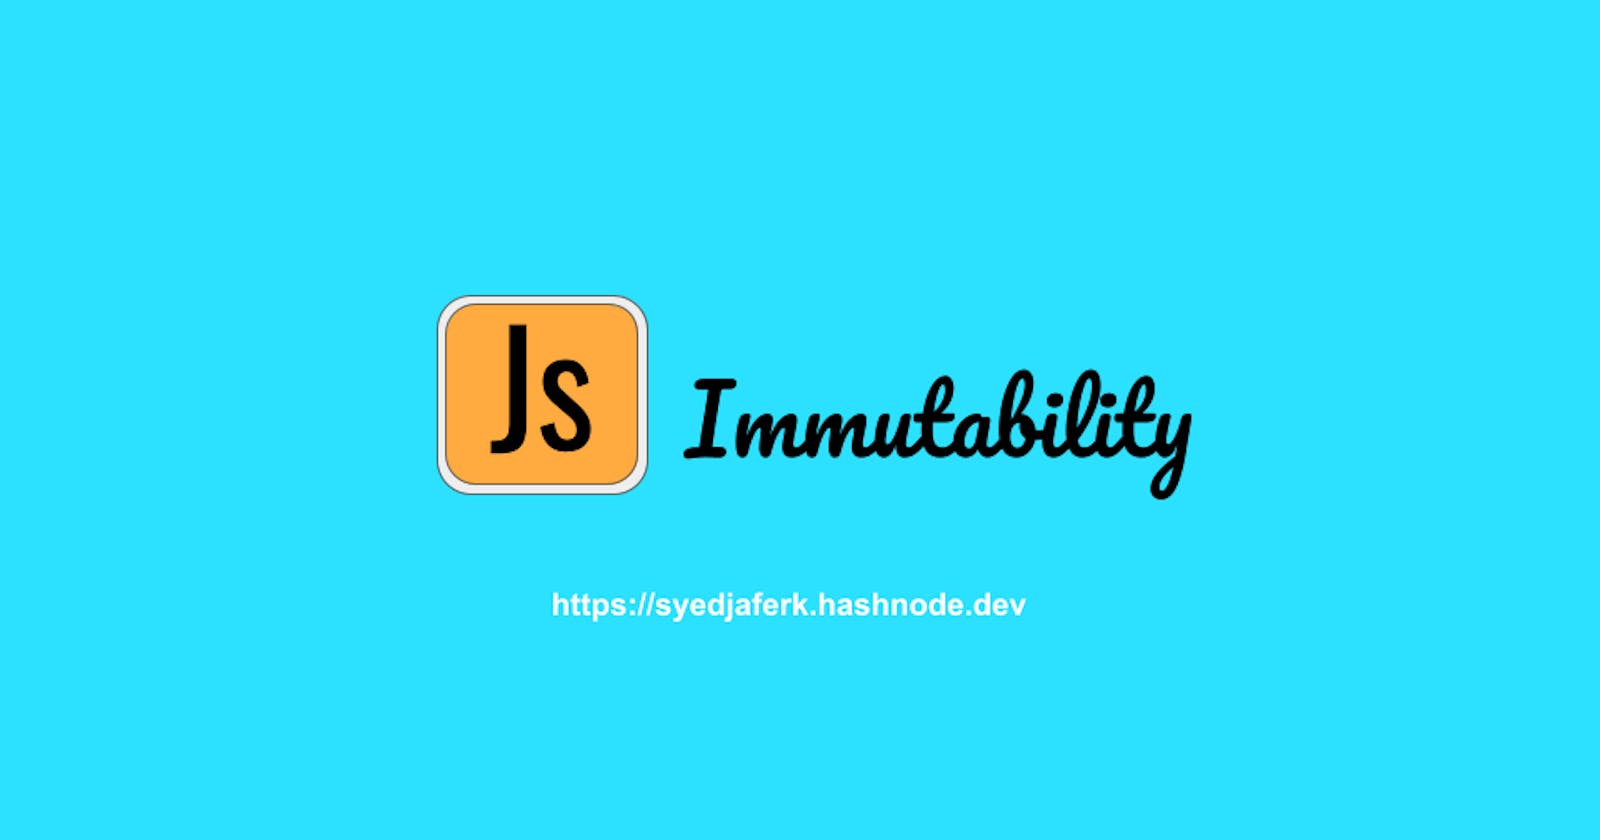 Object Immutability in Javascript